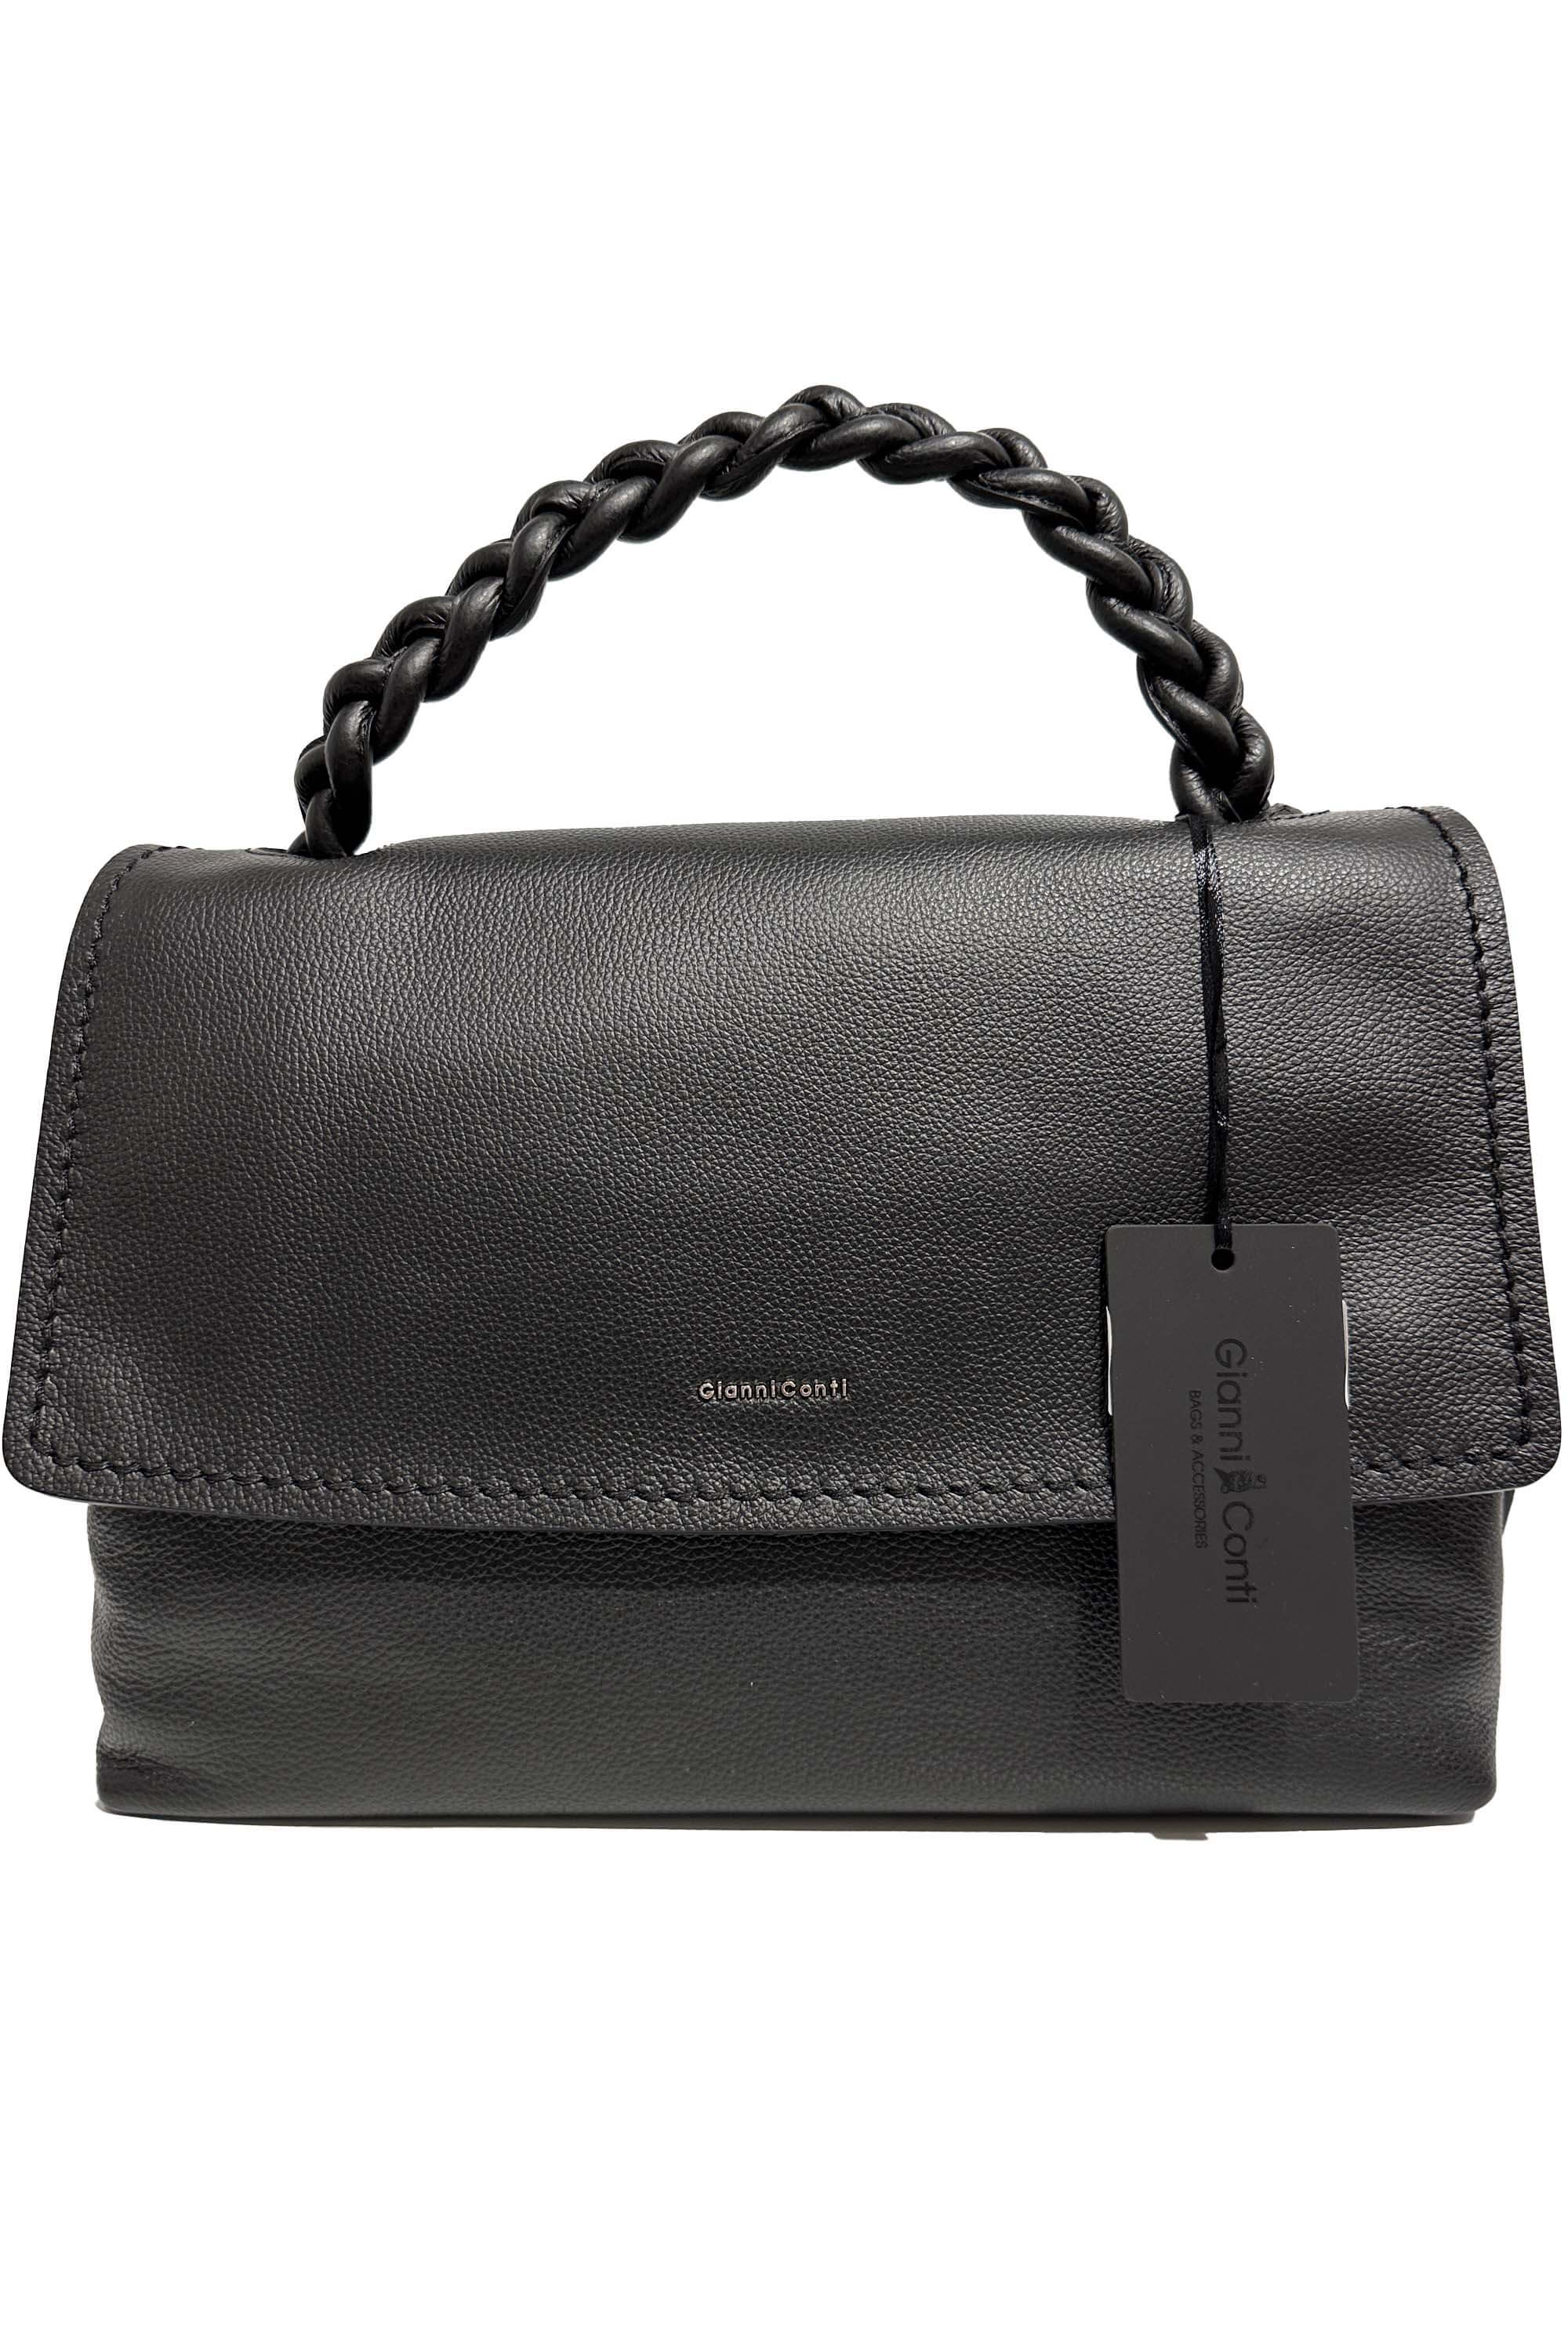 Gianni Conti Leather 4292 Black Bag